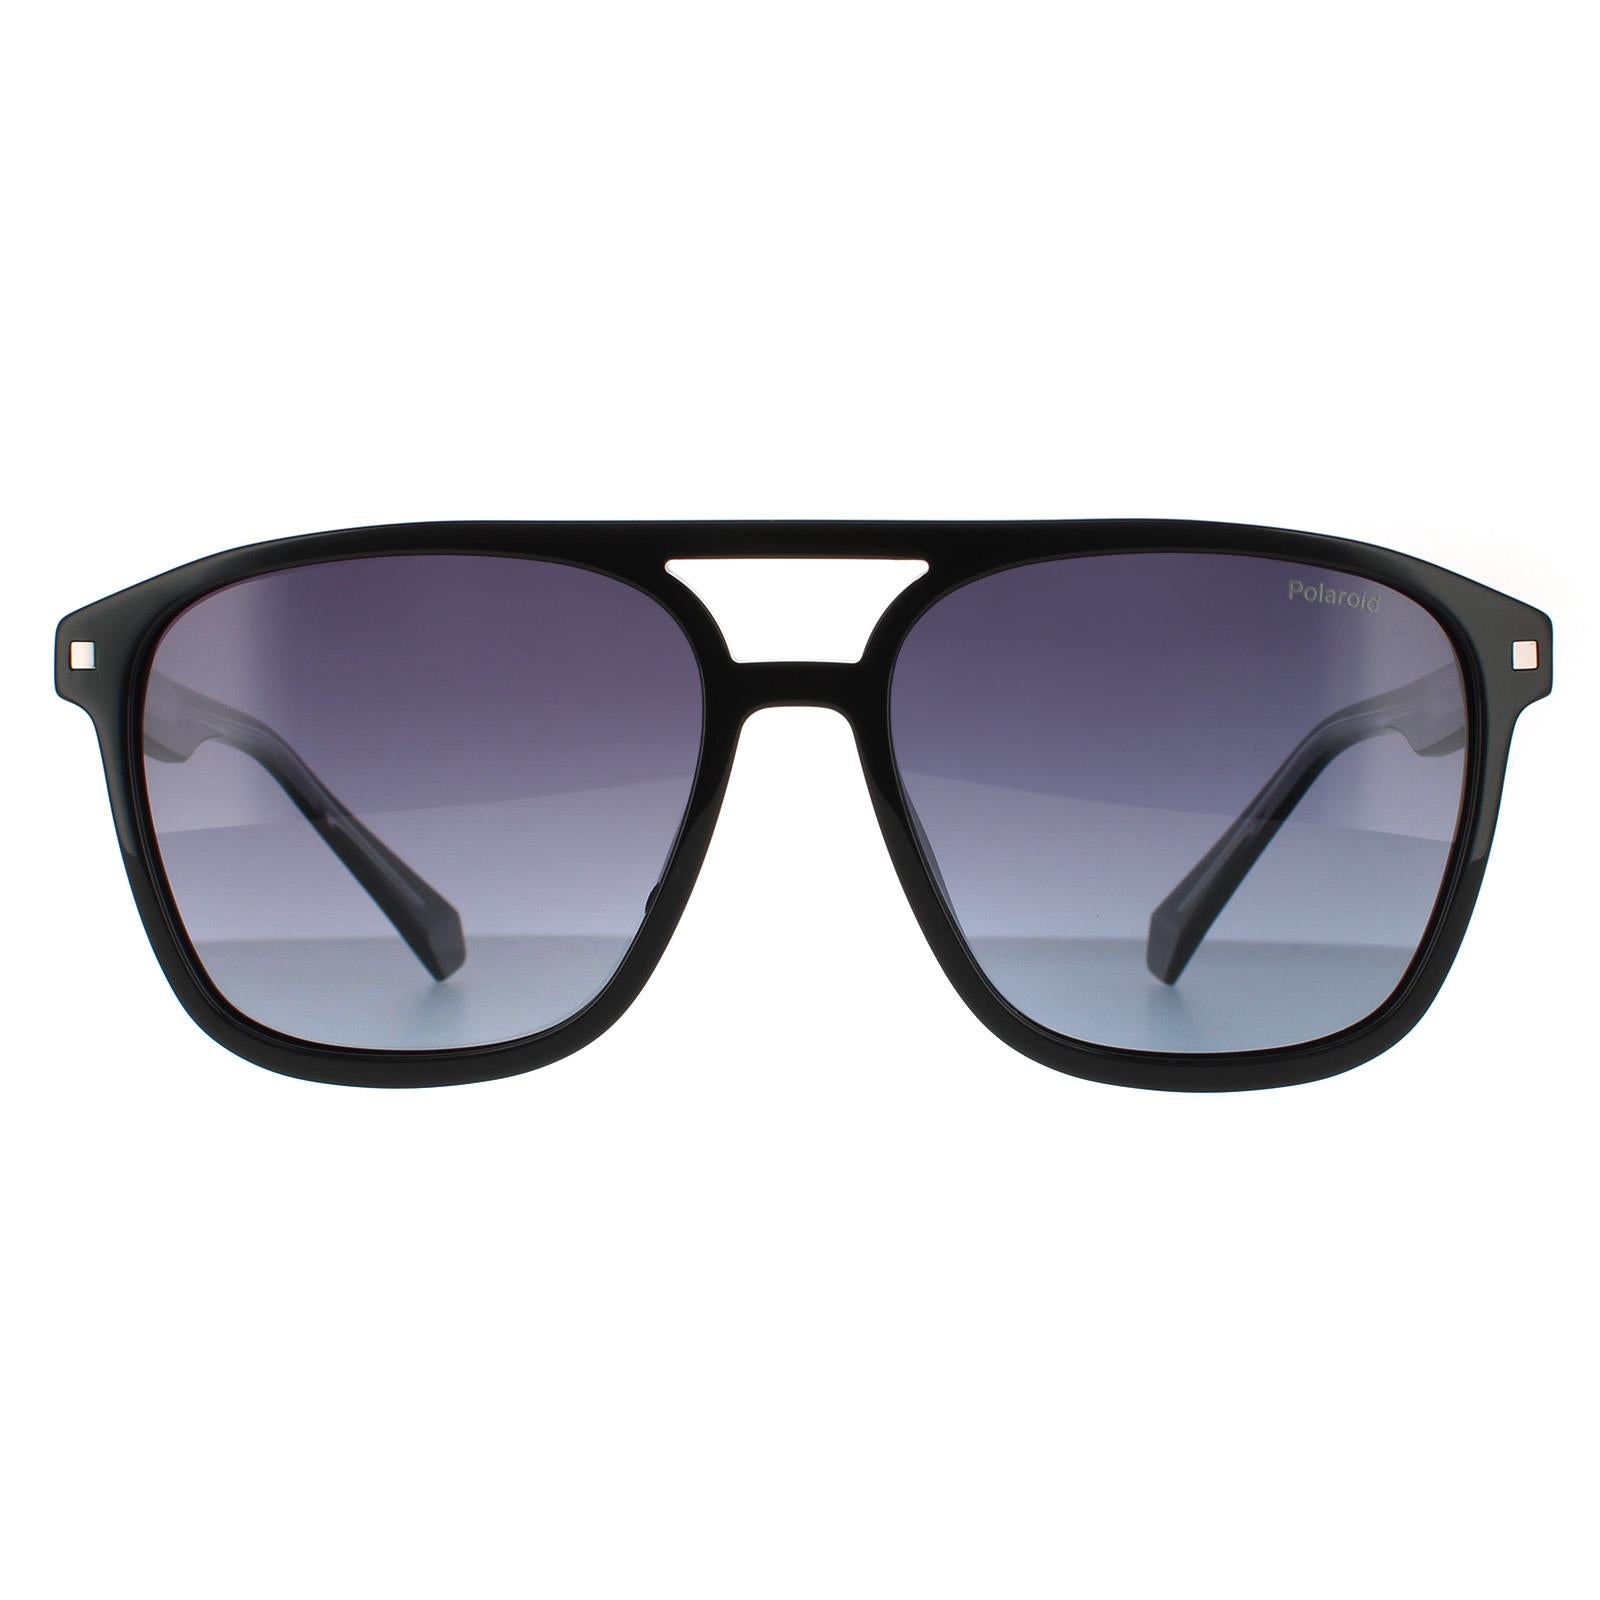 Cheap Polaroid Sunglasses – Discounted Sunglasses